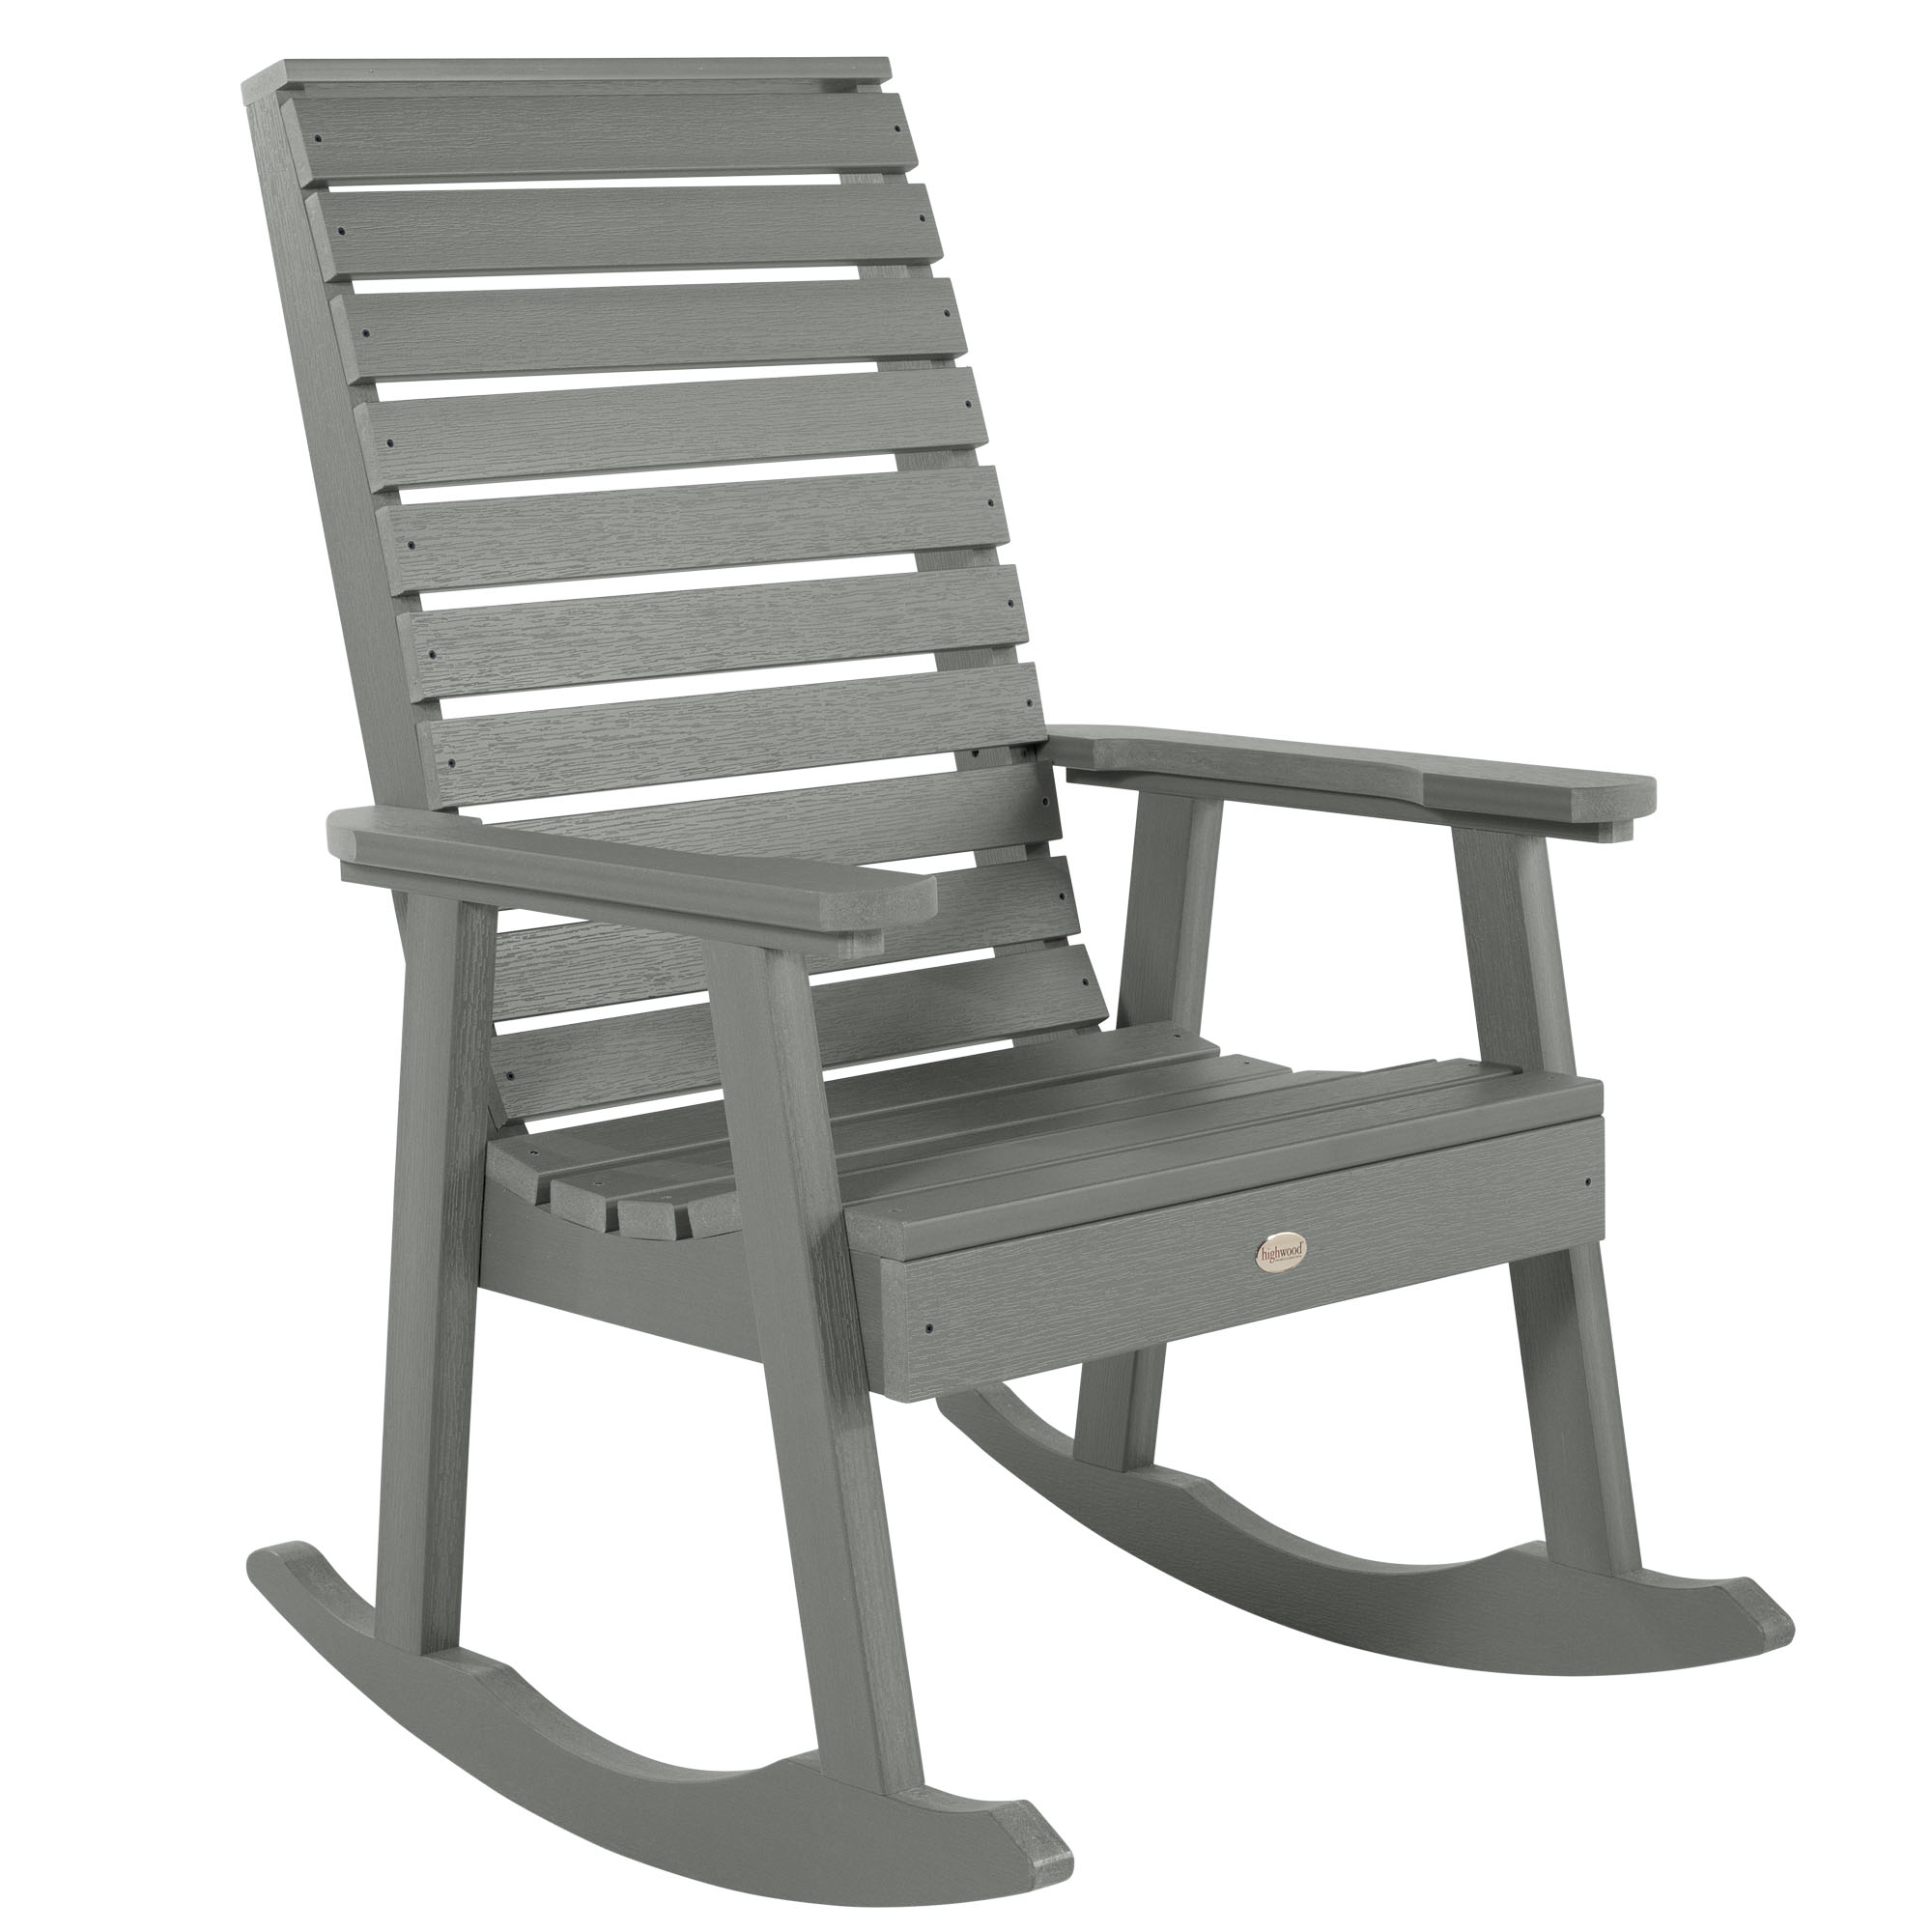 Highwood Weatherly Rocking Chair - image 1 of 5